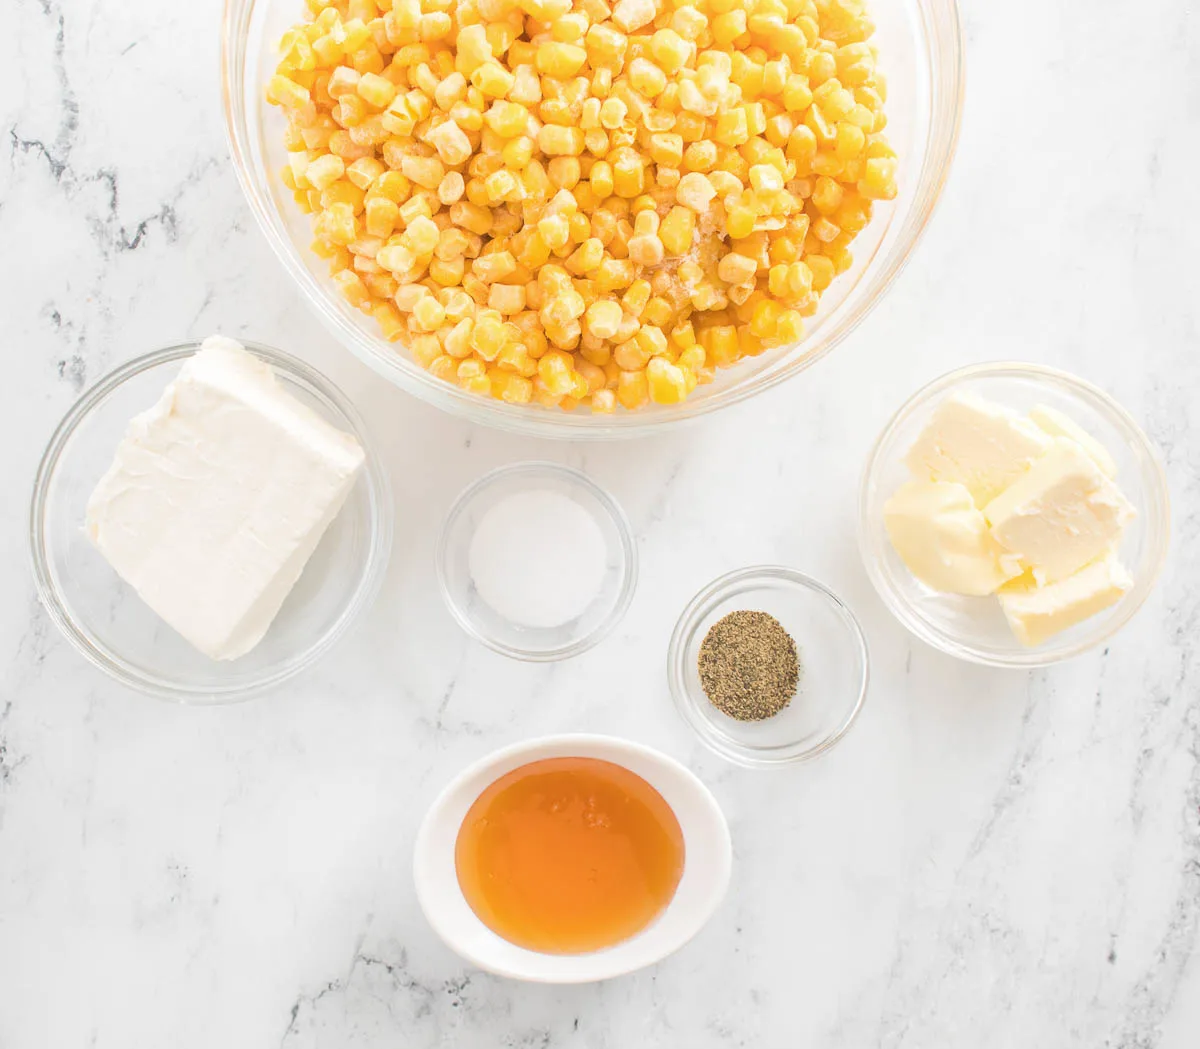 Ingredients to make honey butter corn.